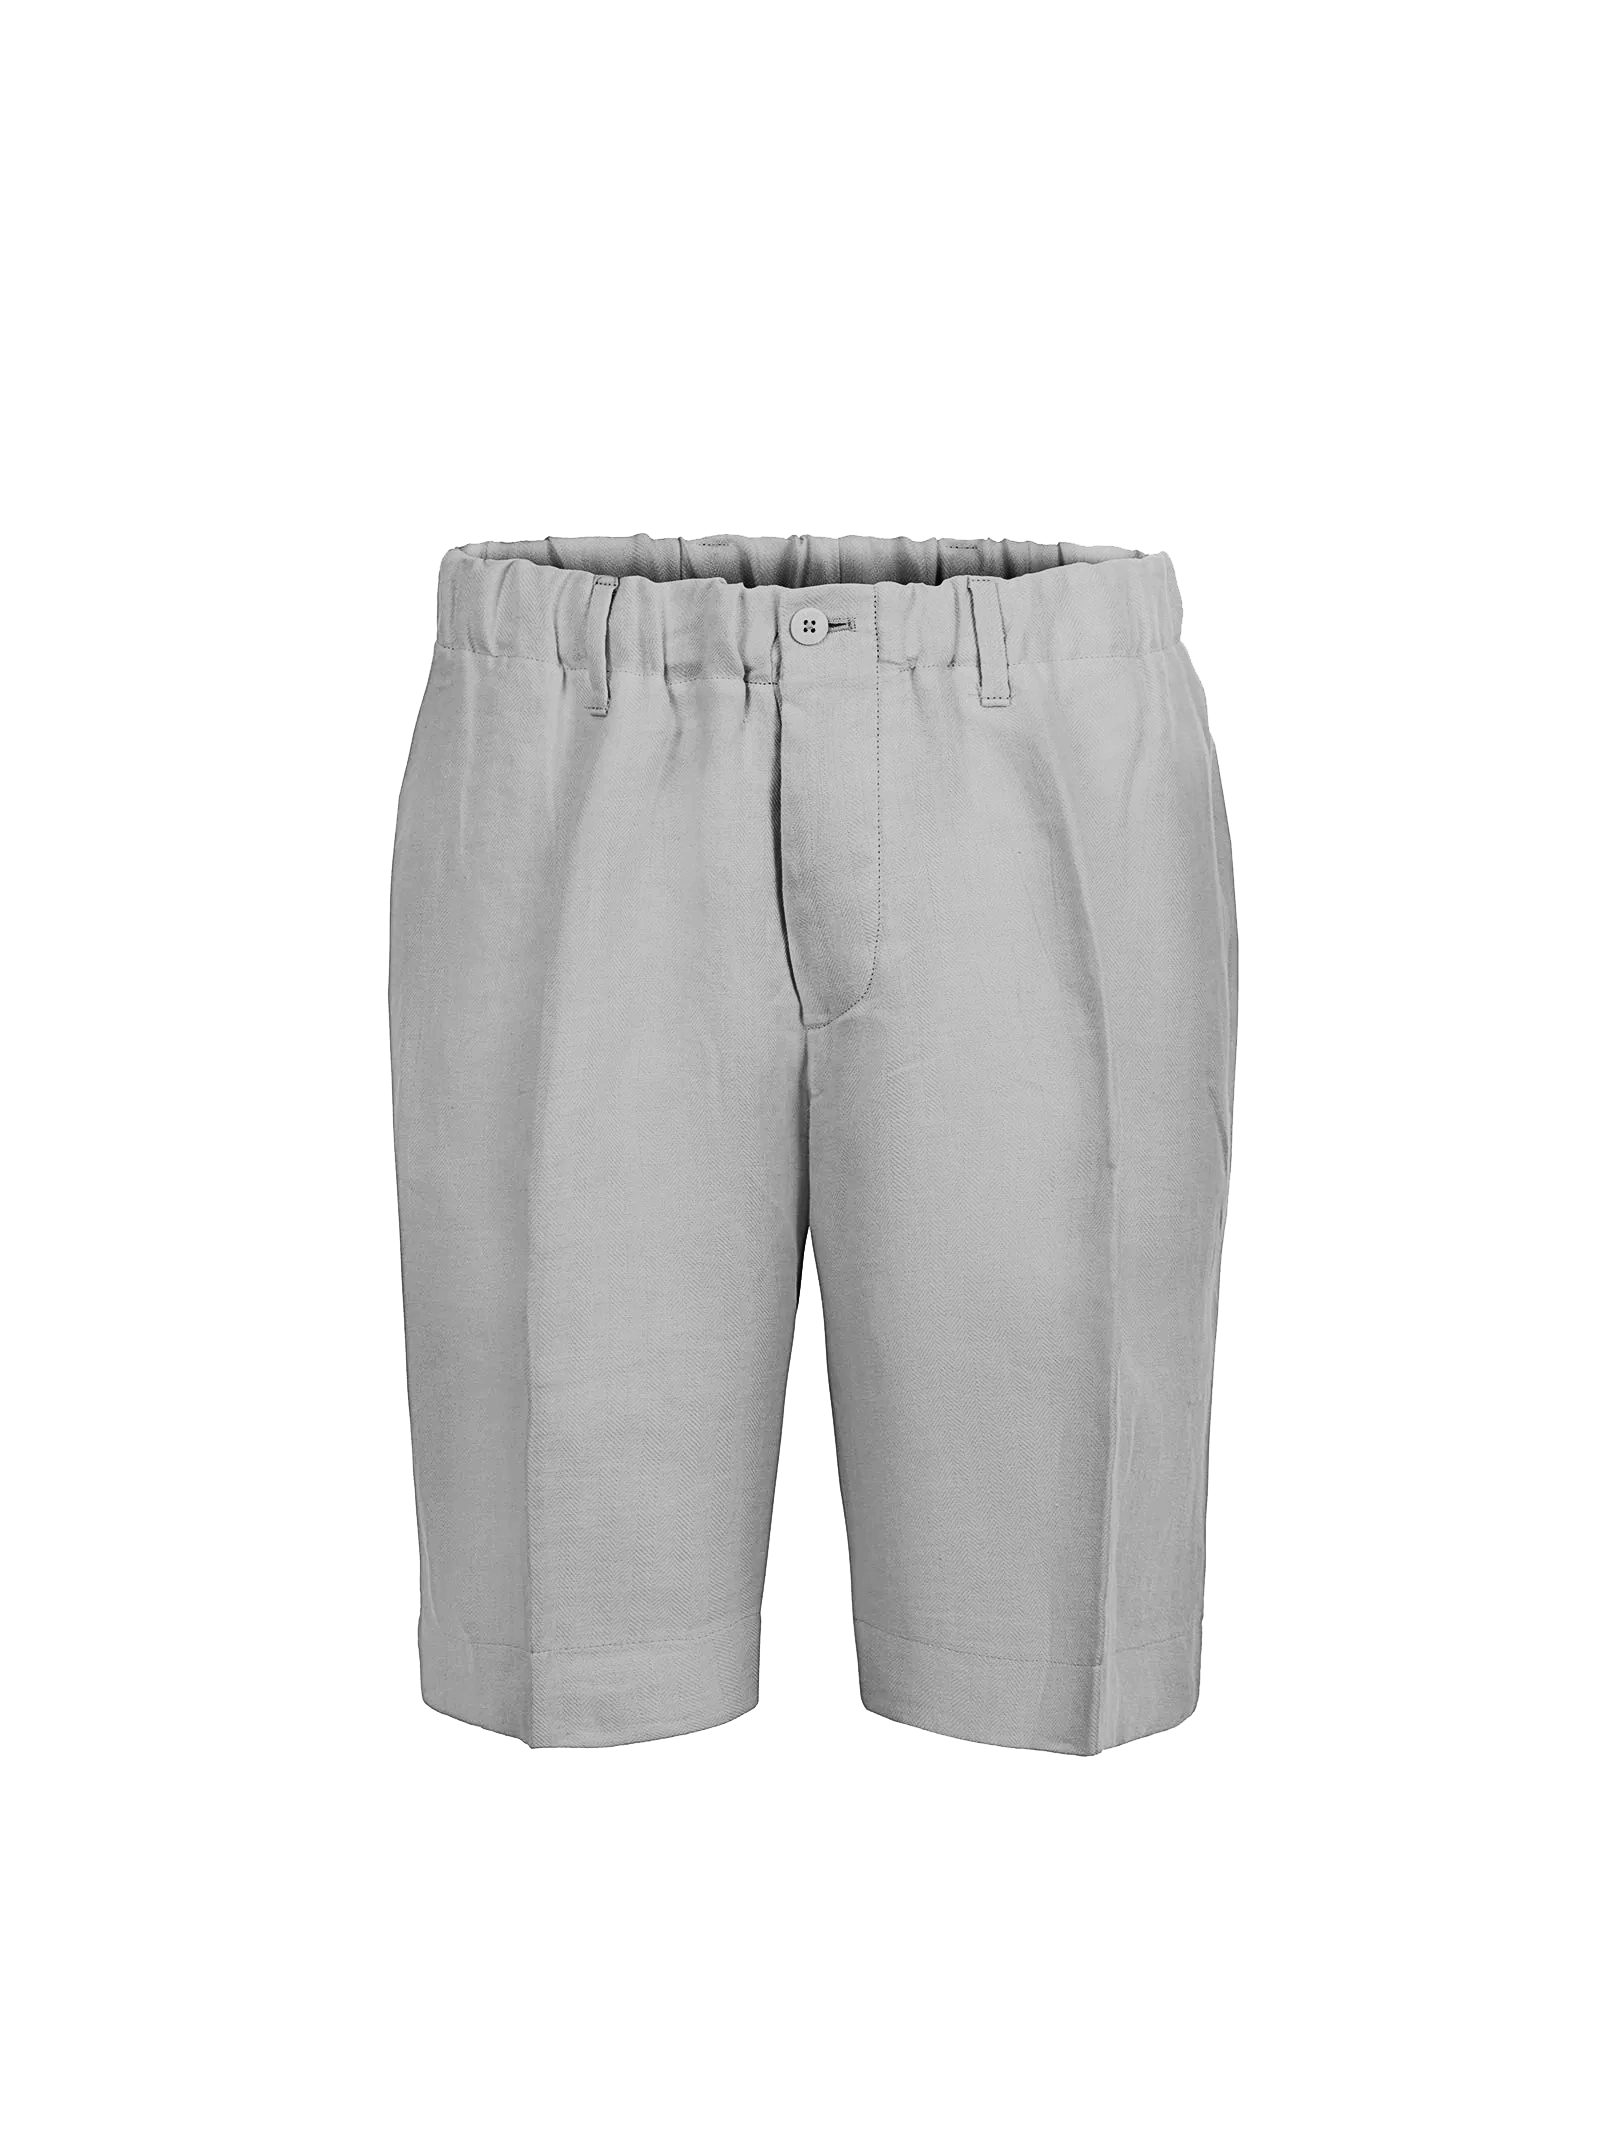 Bermuda Capri for men 100% Capri light grey linen pant front